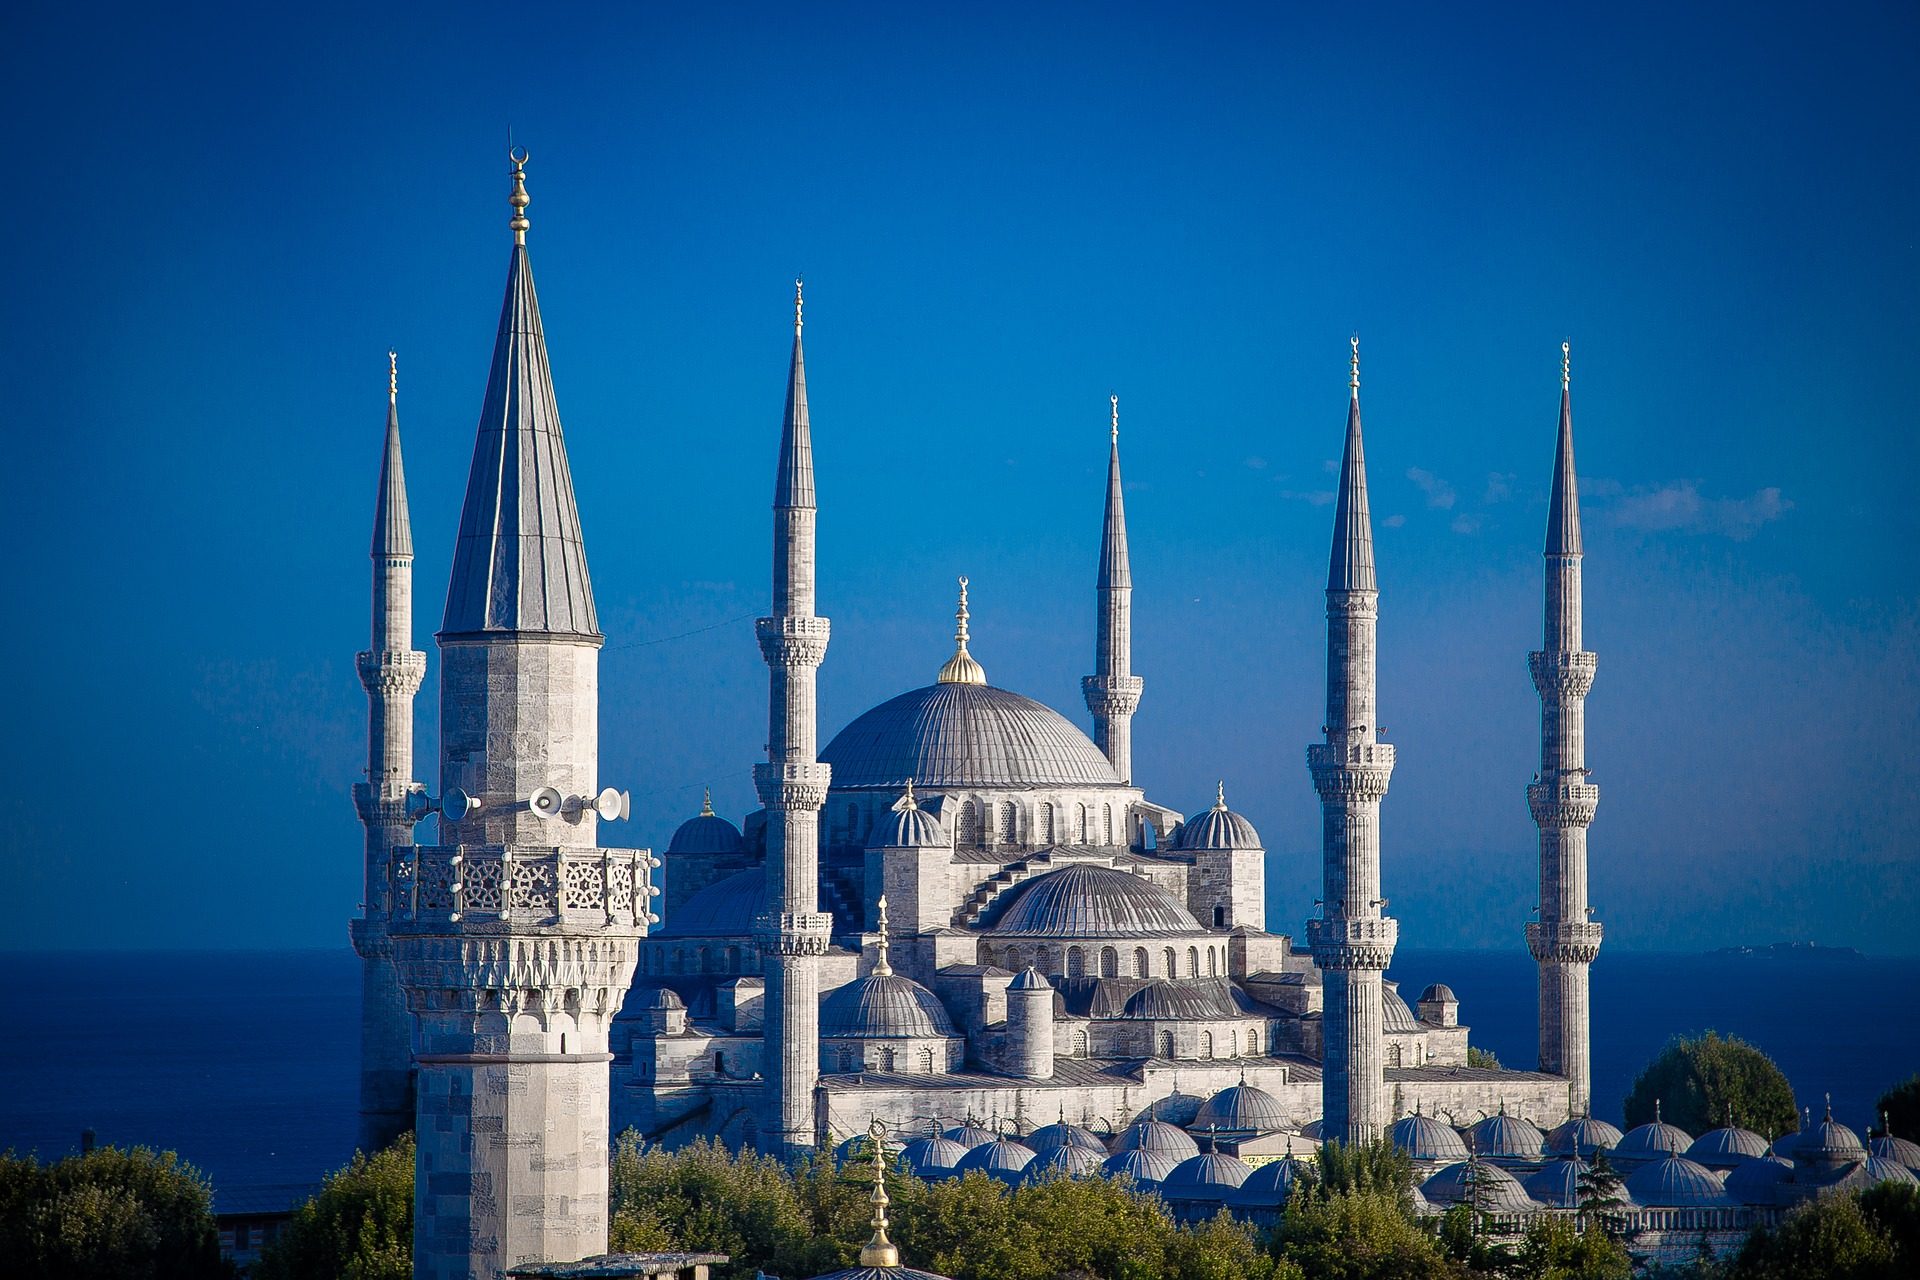 Istanbul interessante Orte - Flüge ab 92,00€ & Hotel ab 98,00€ = 1 Woche 1